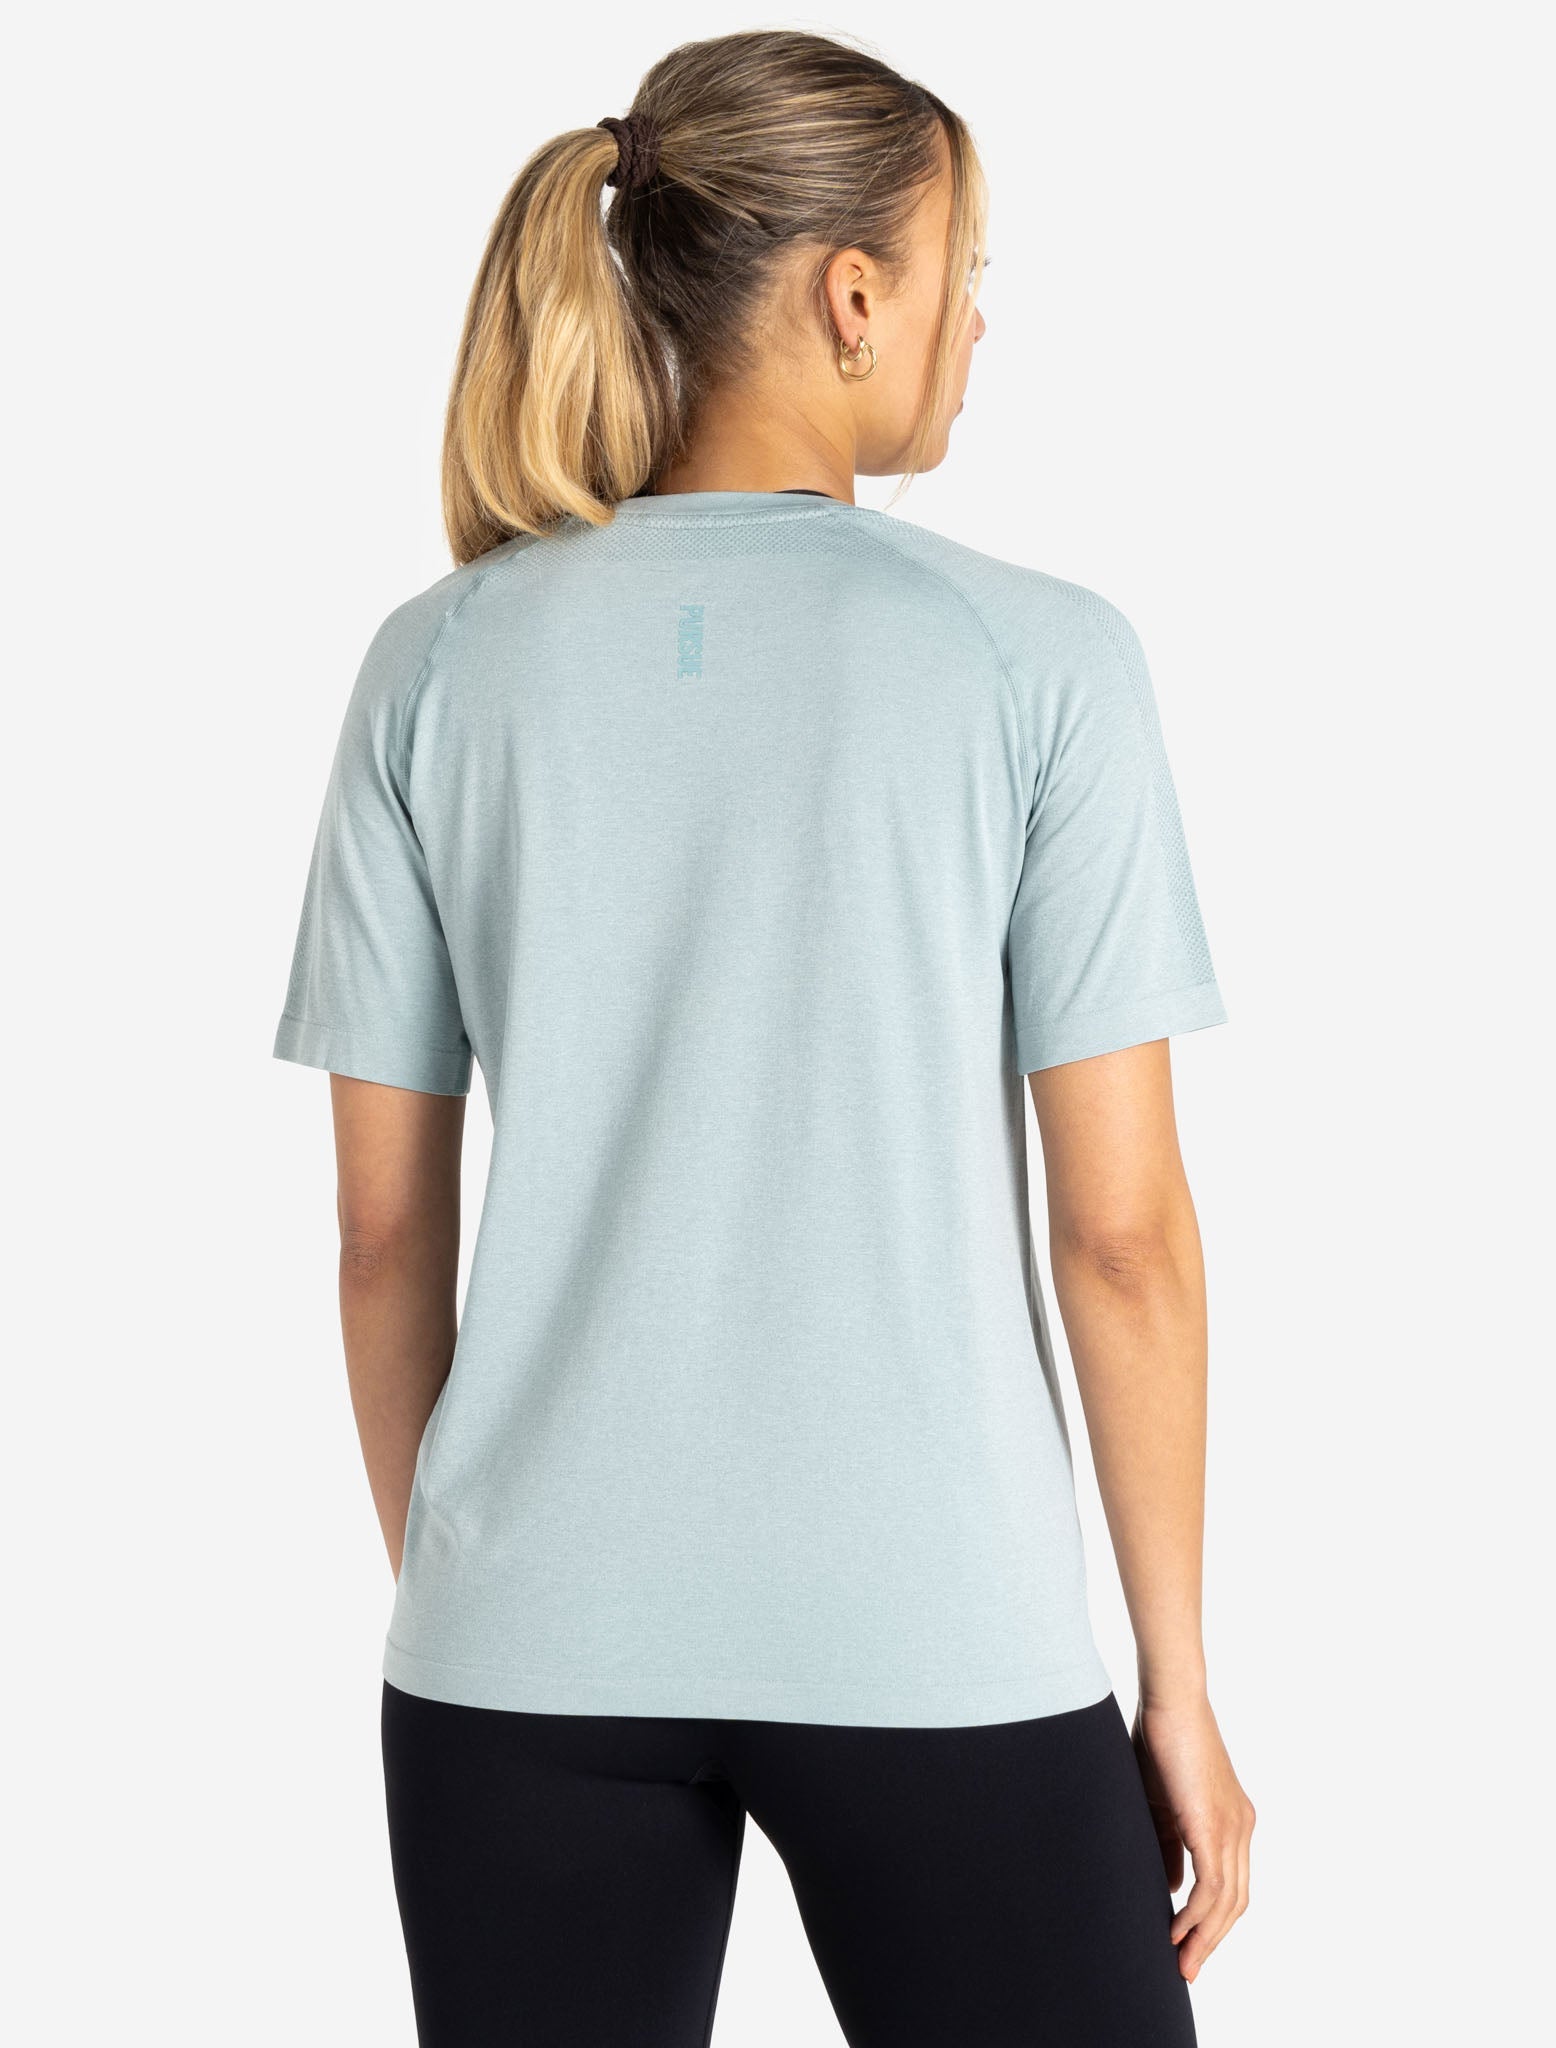 Seamless T-Shirt | Seafoam Green Marl | Pursue Fitness